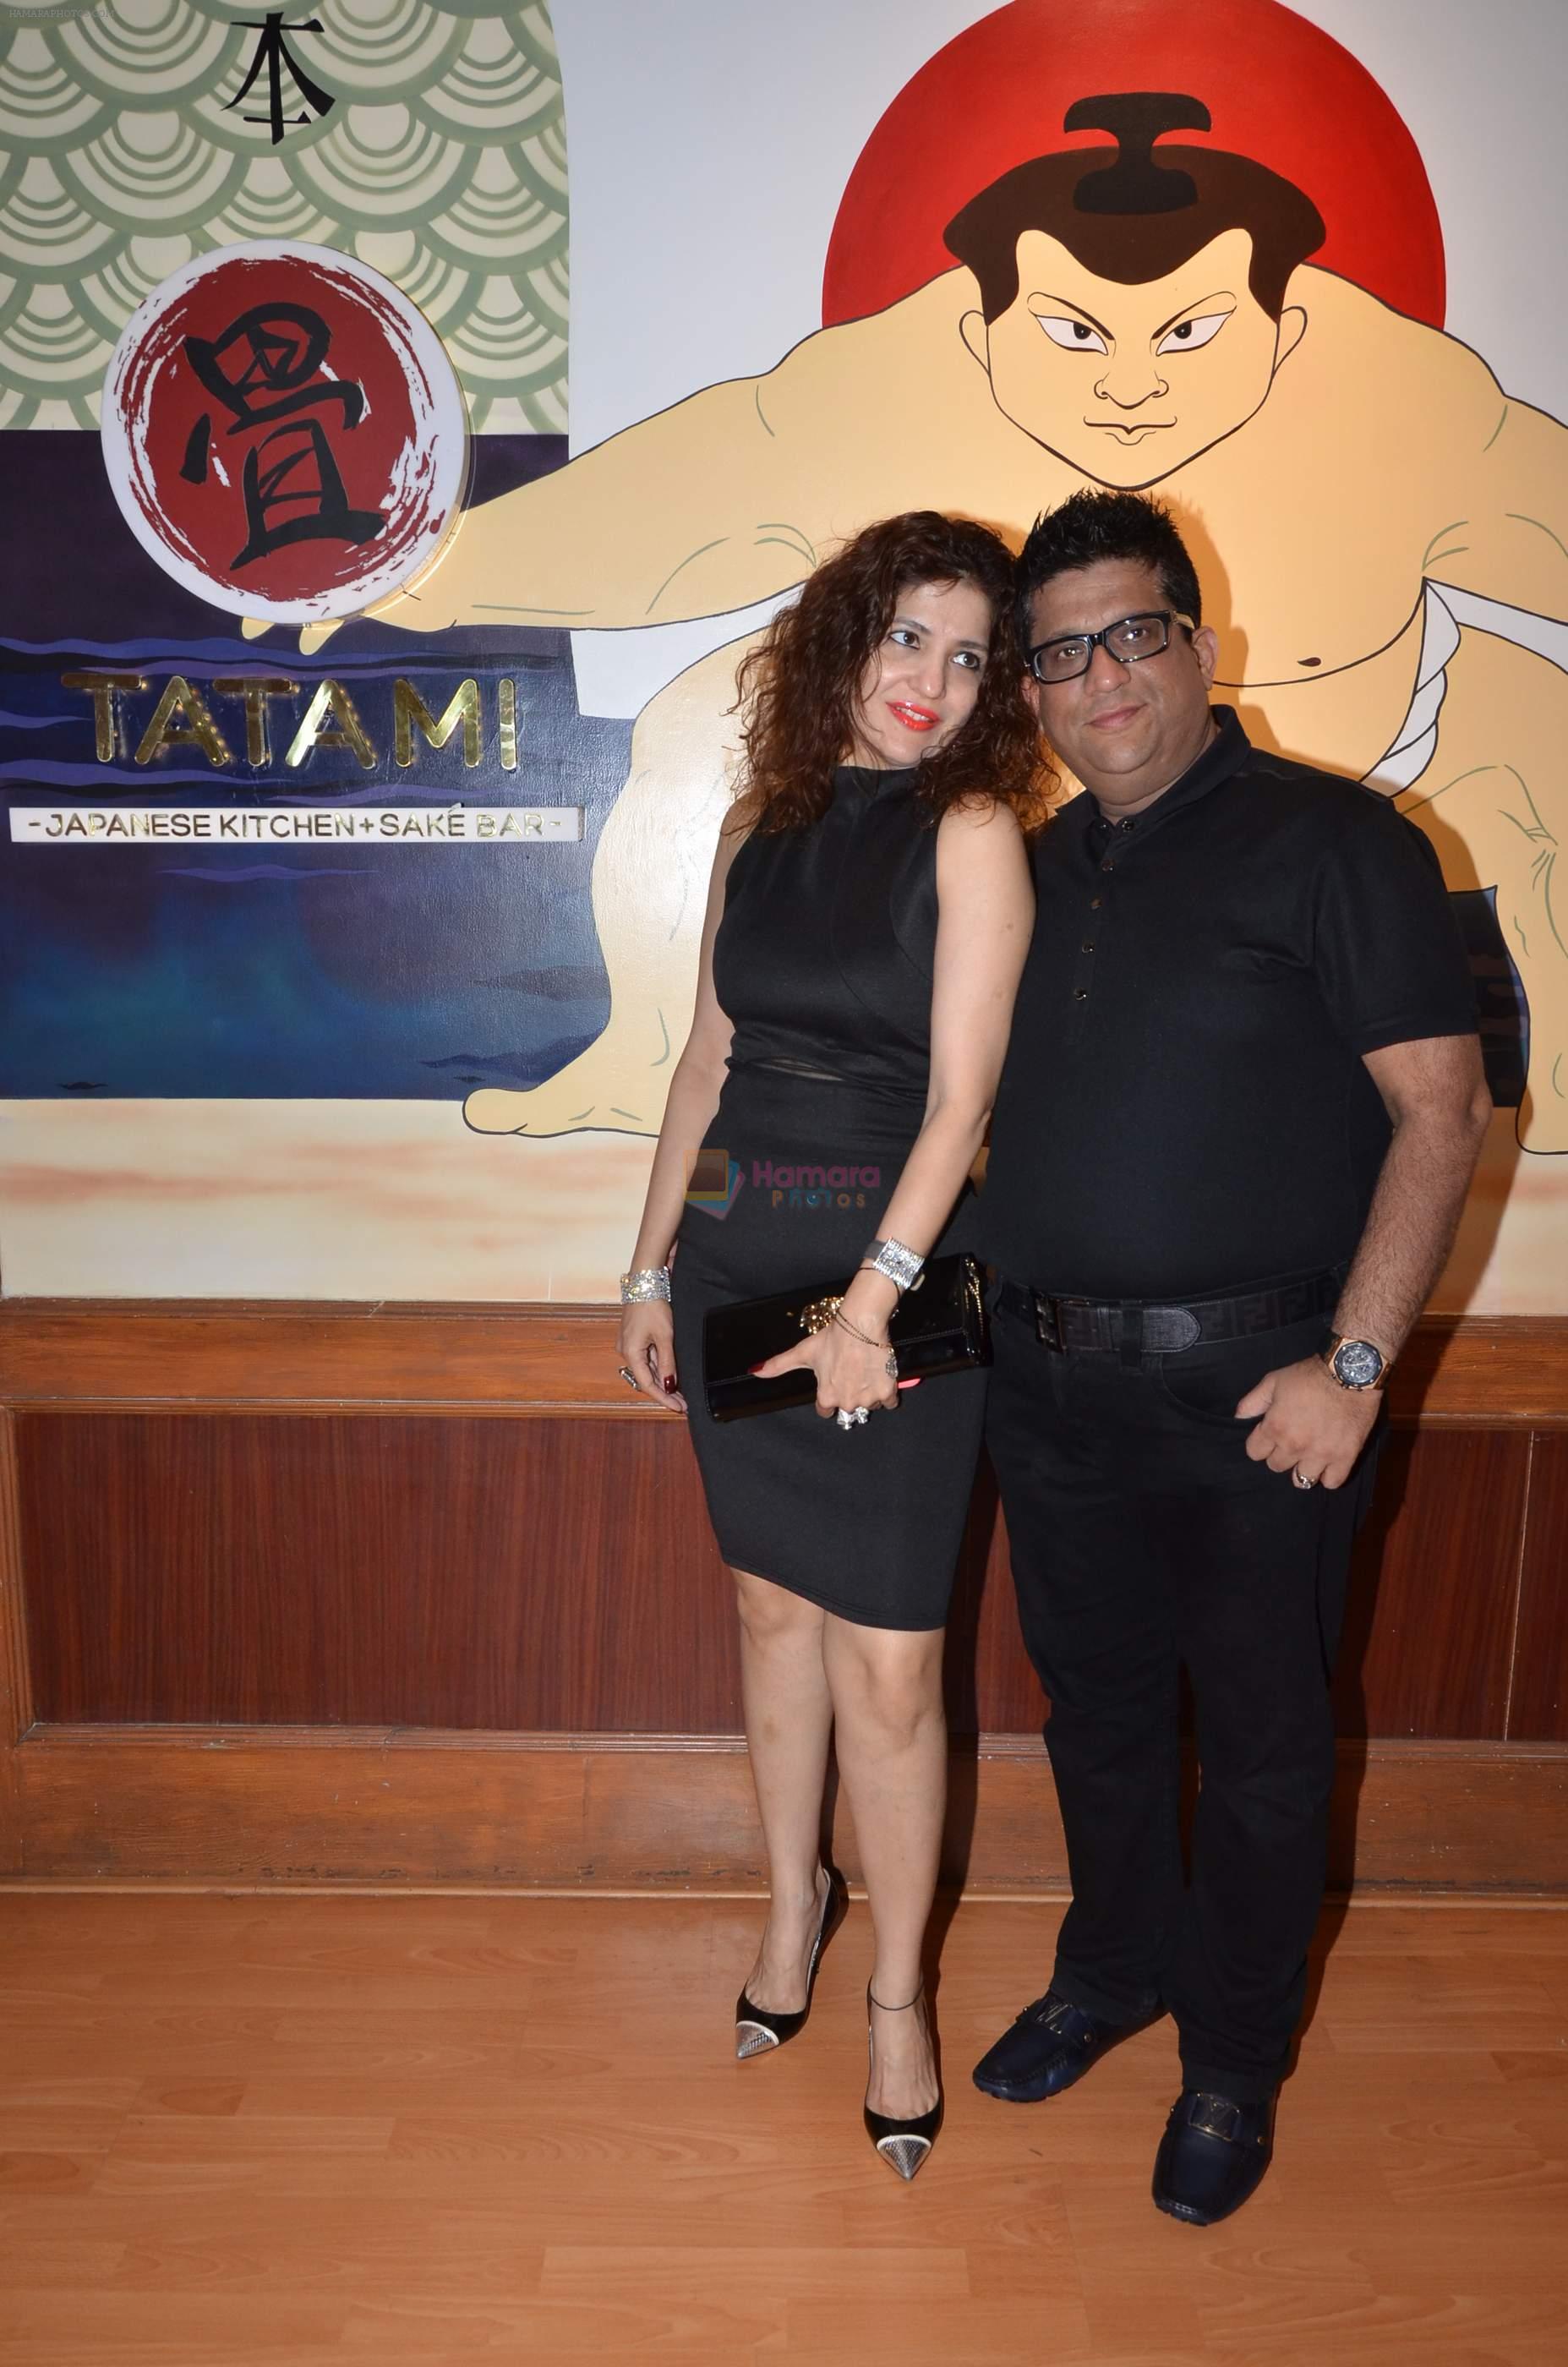 deepak tulsiani with wife of dwarkadas chandumal jeweller at Tatami restaurant launch hosted by Neha Premji and Shivam Hingorani on 3rd March 2016